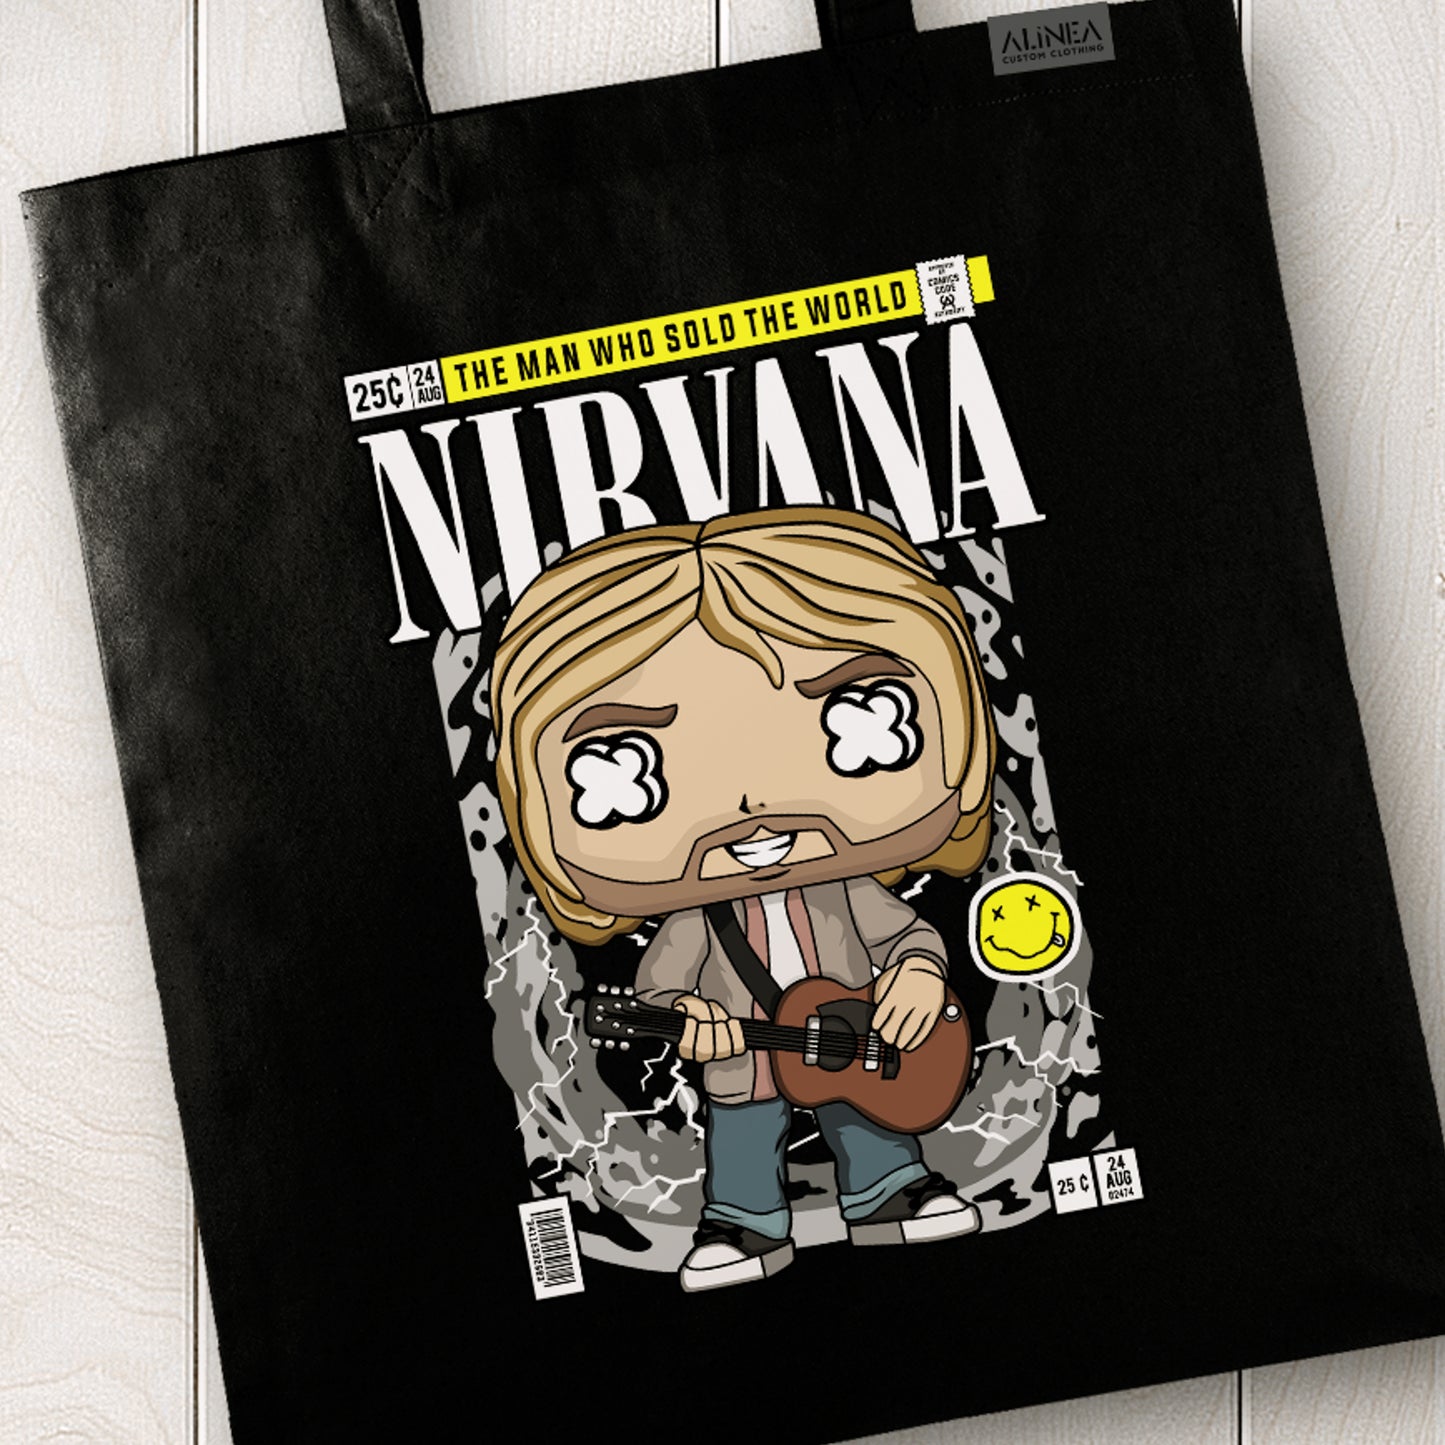 Nirvana Tote Bag